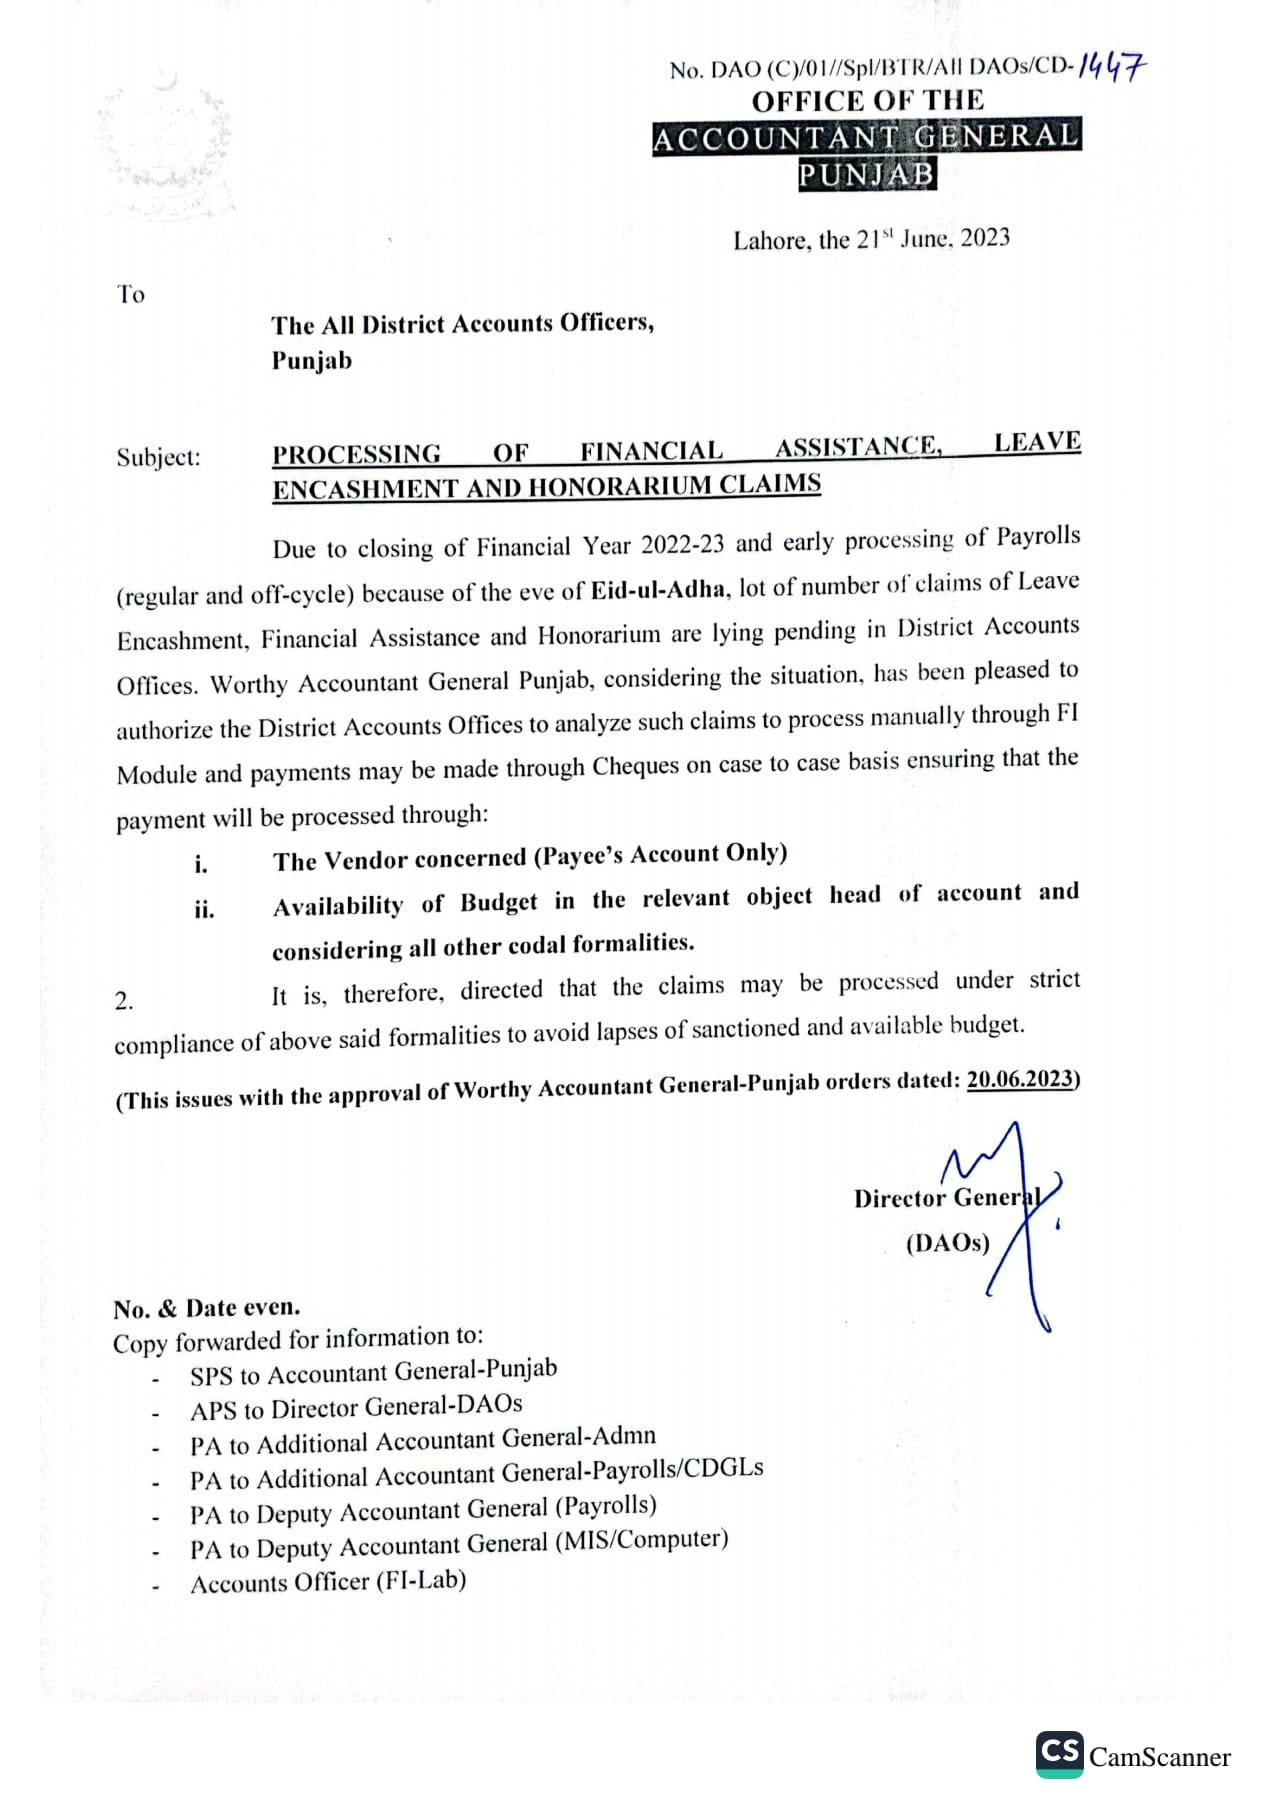 Processing Leave Encashment, Financial Assistant and Honorarium Claims Punjab